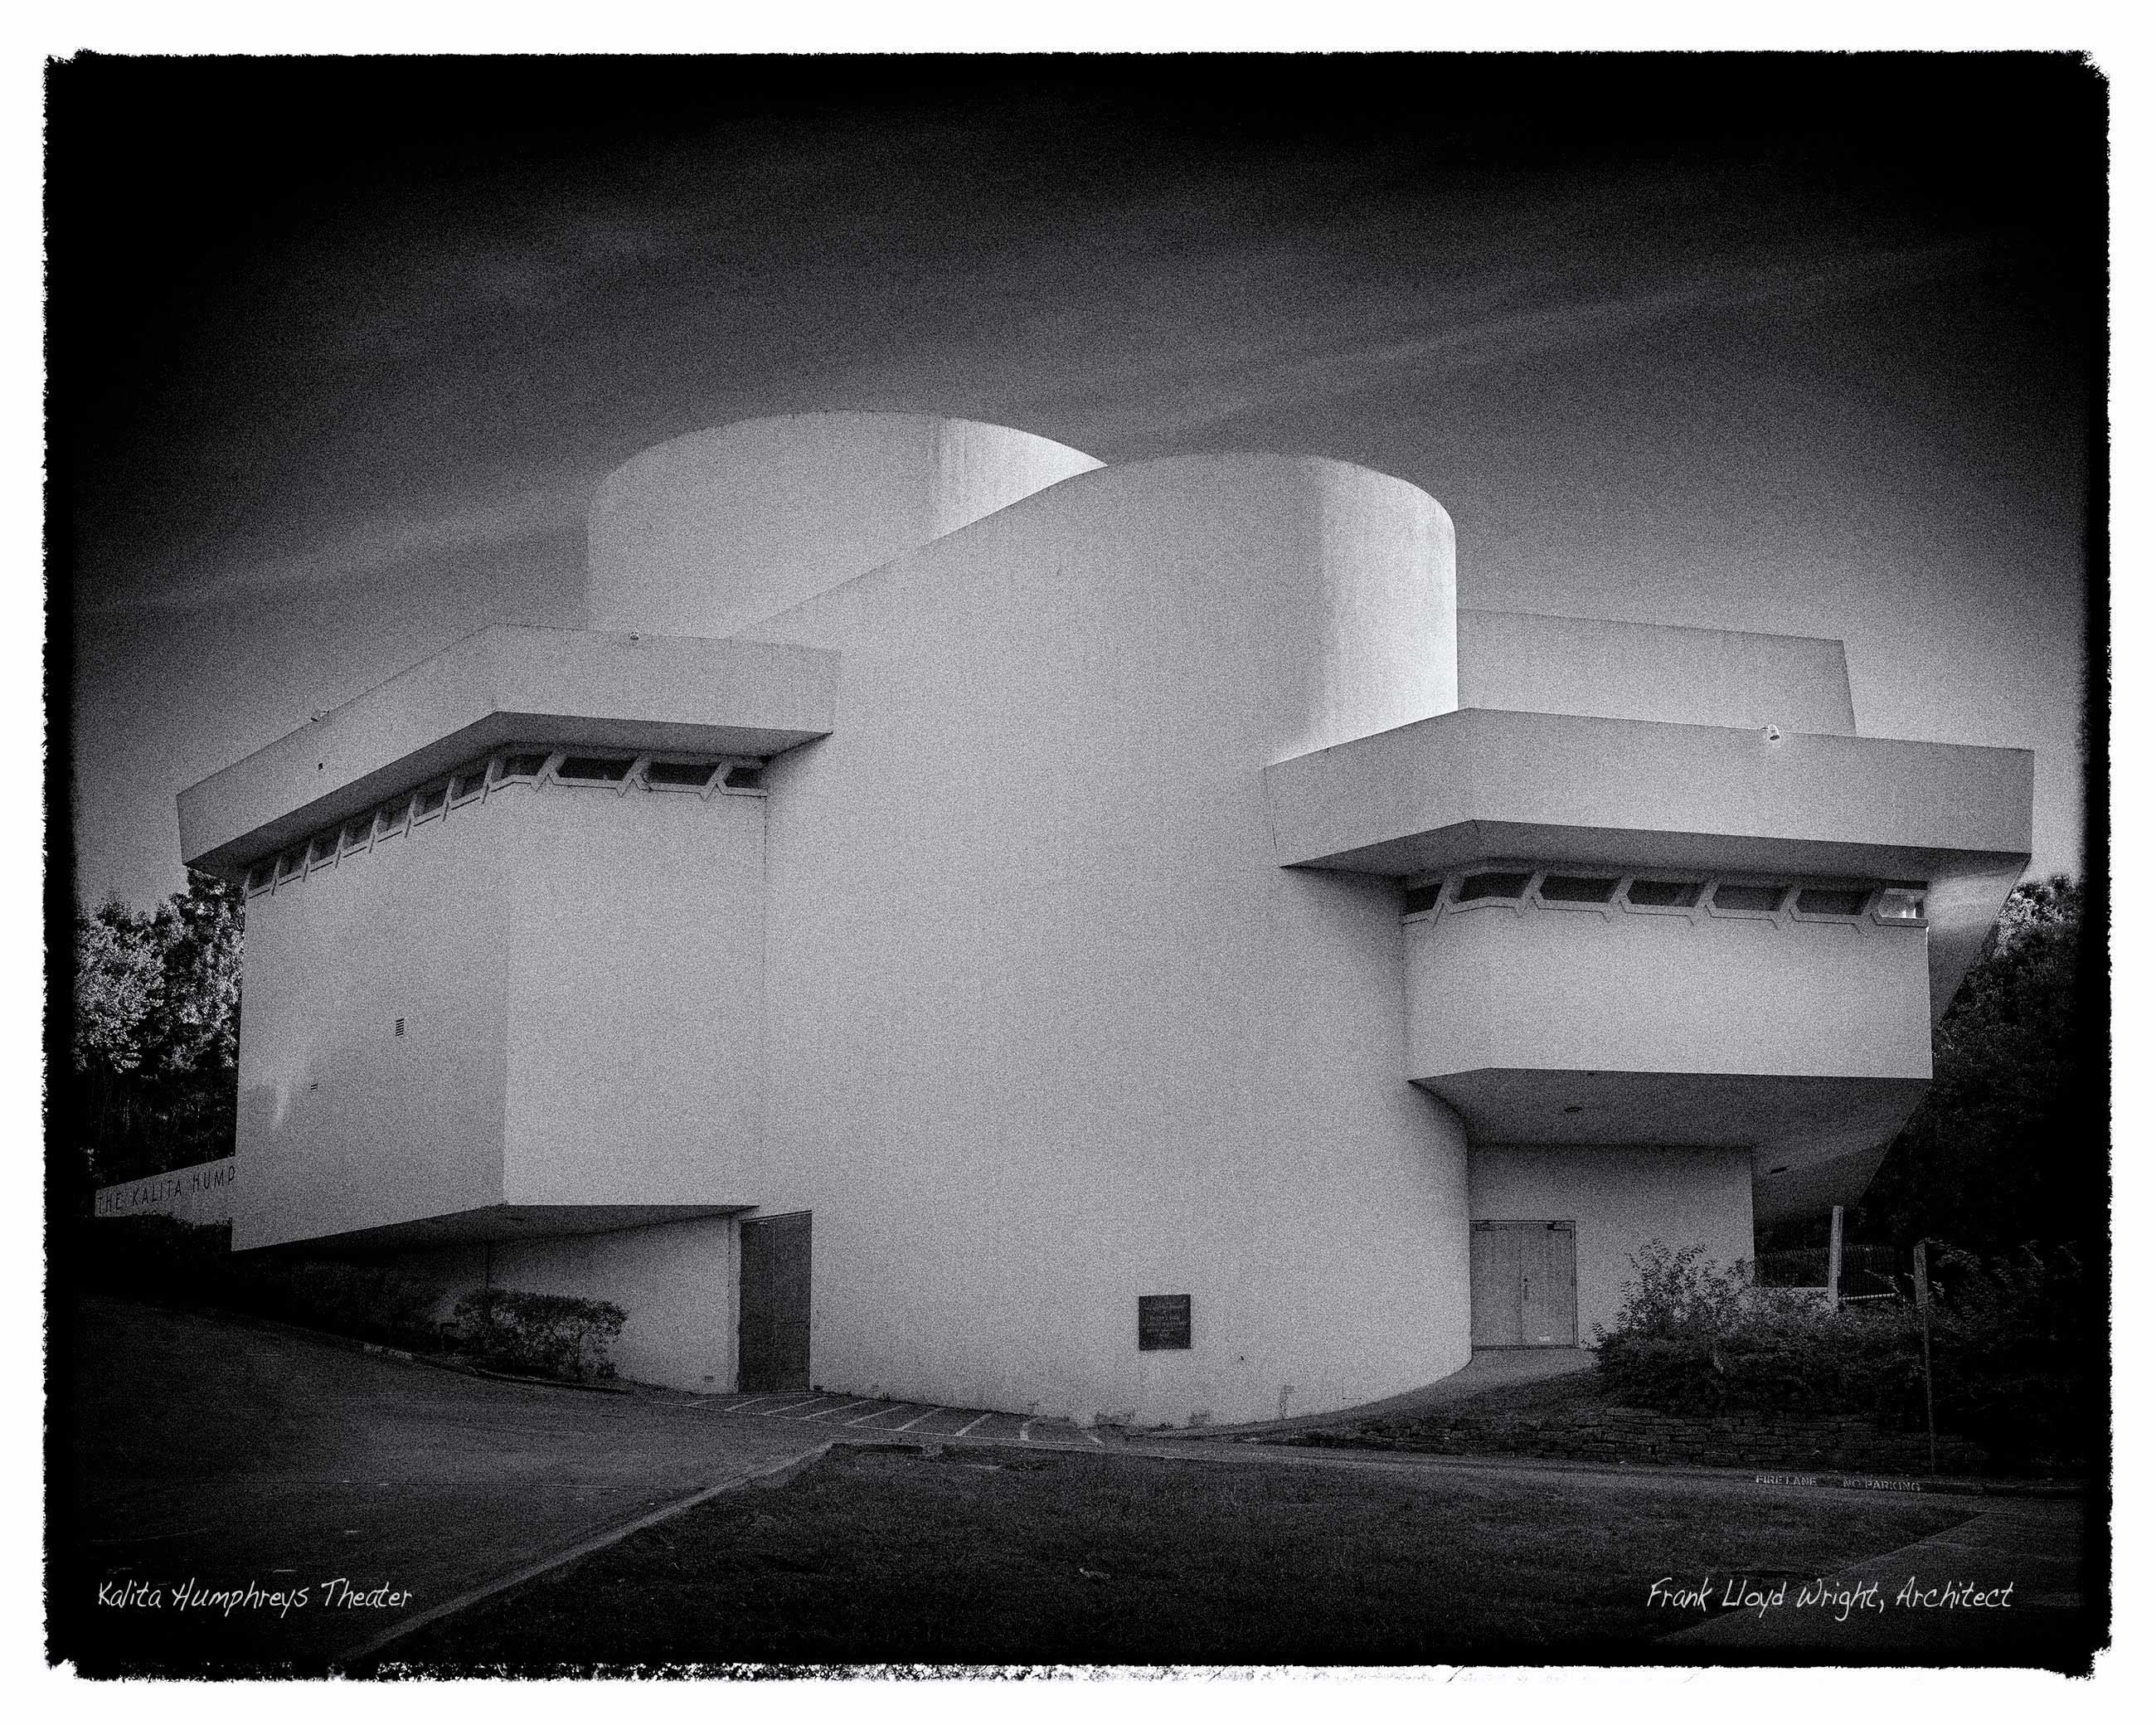 Kalita Humphries Theater -Frank Lloyd Wright Architect